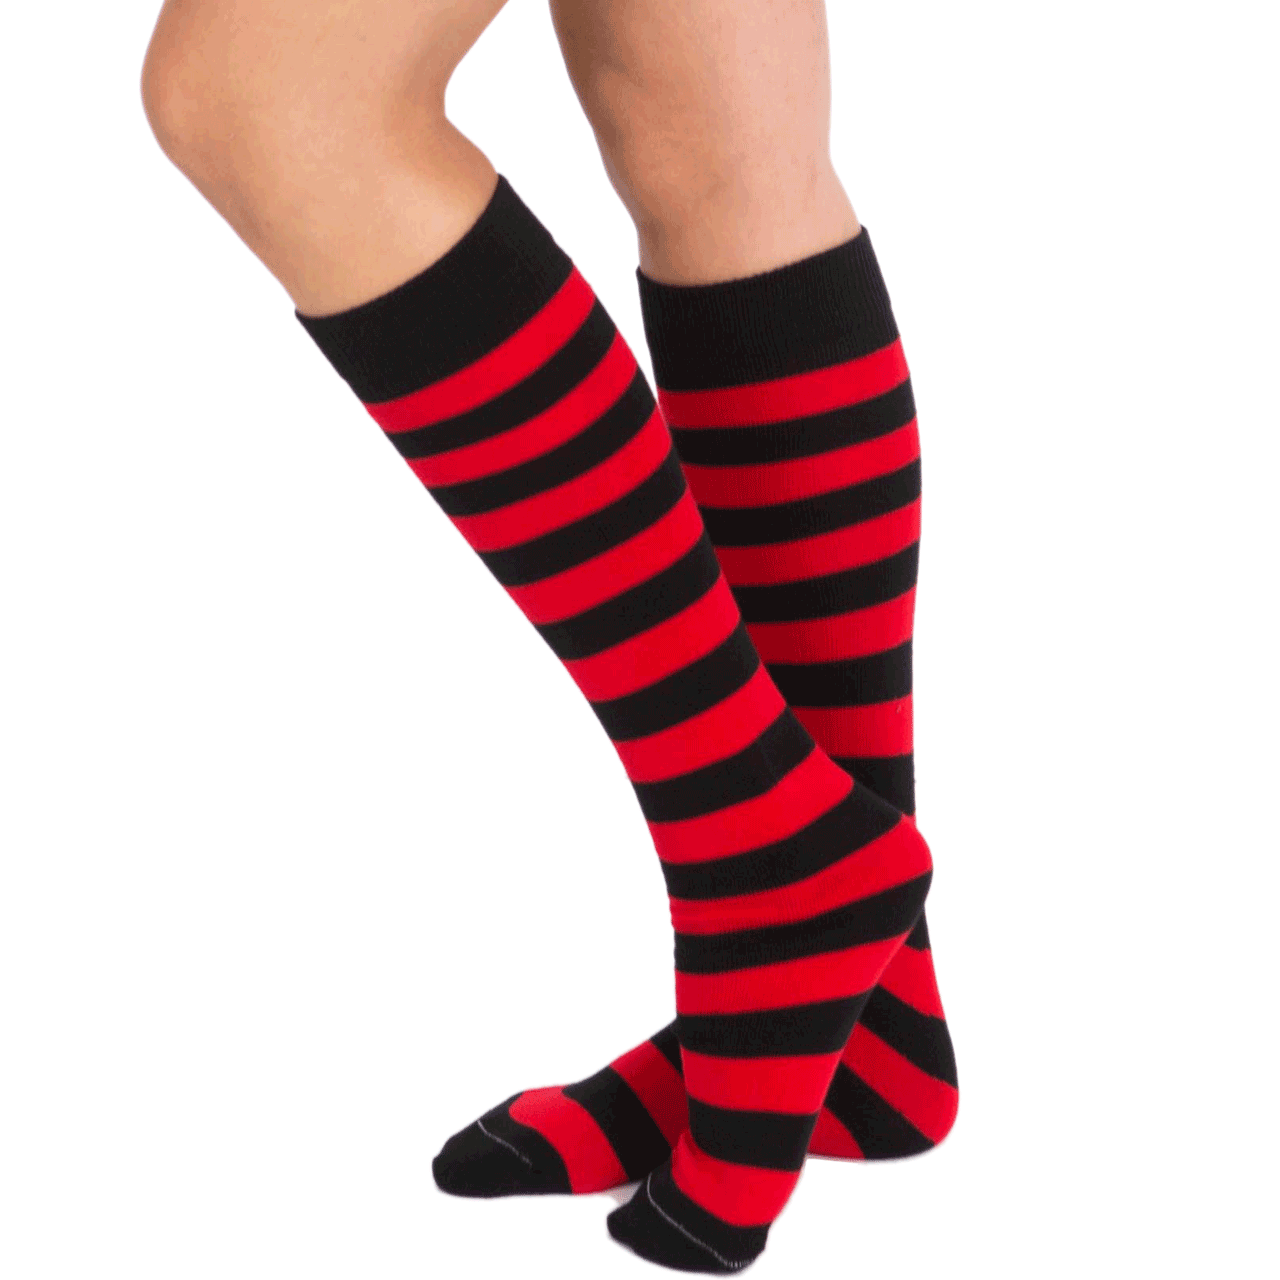 Striped Red/Black Knee High Socks